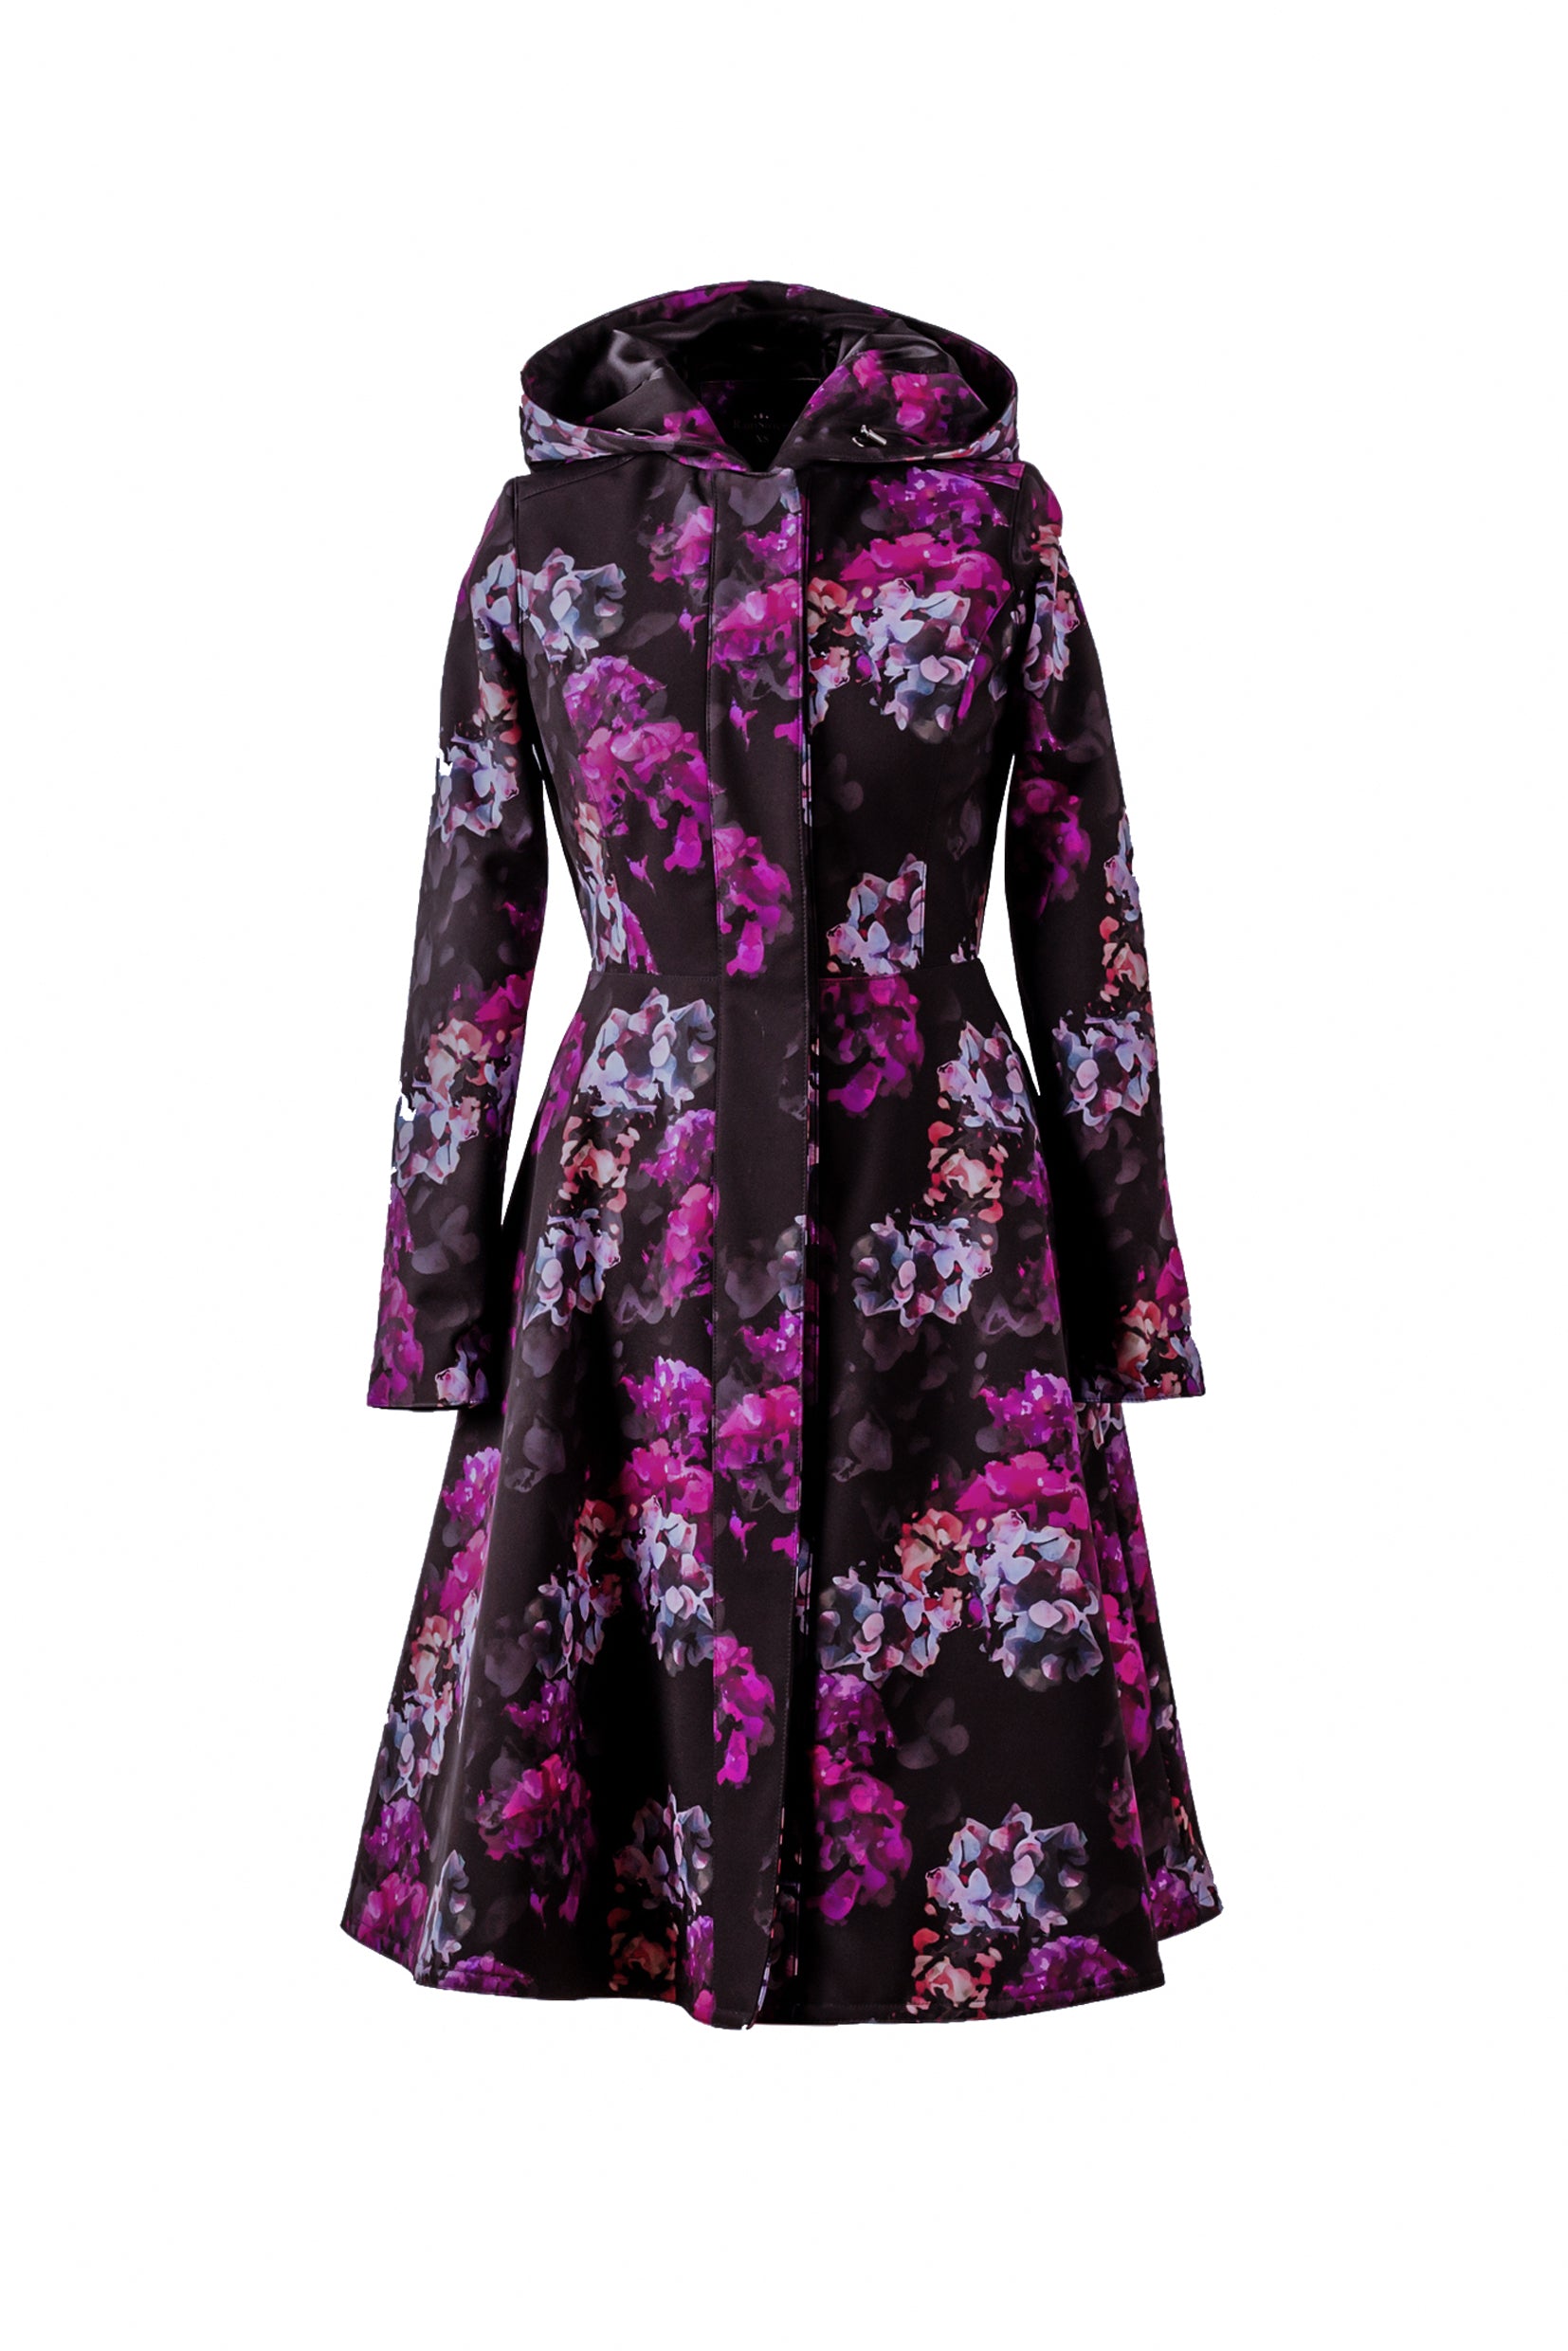 Black and Purple Women's Skirted Waterproof Coat with Hood